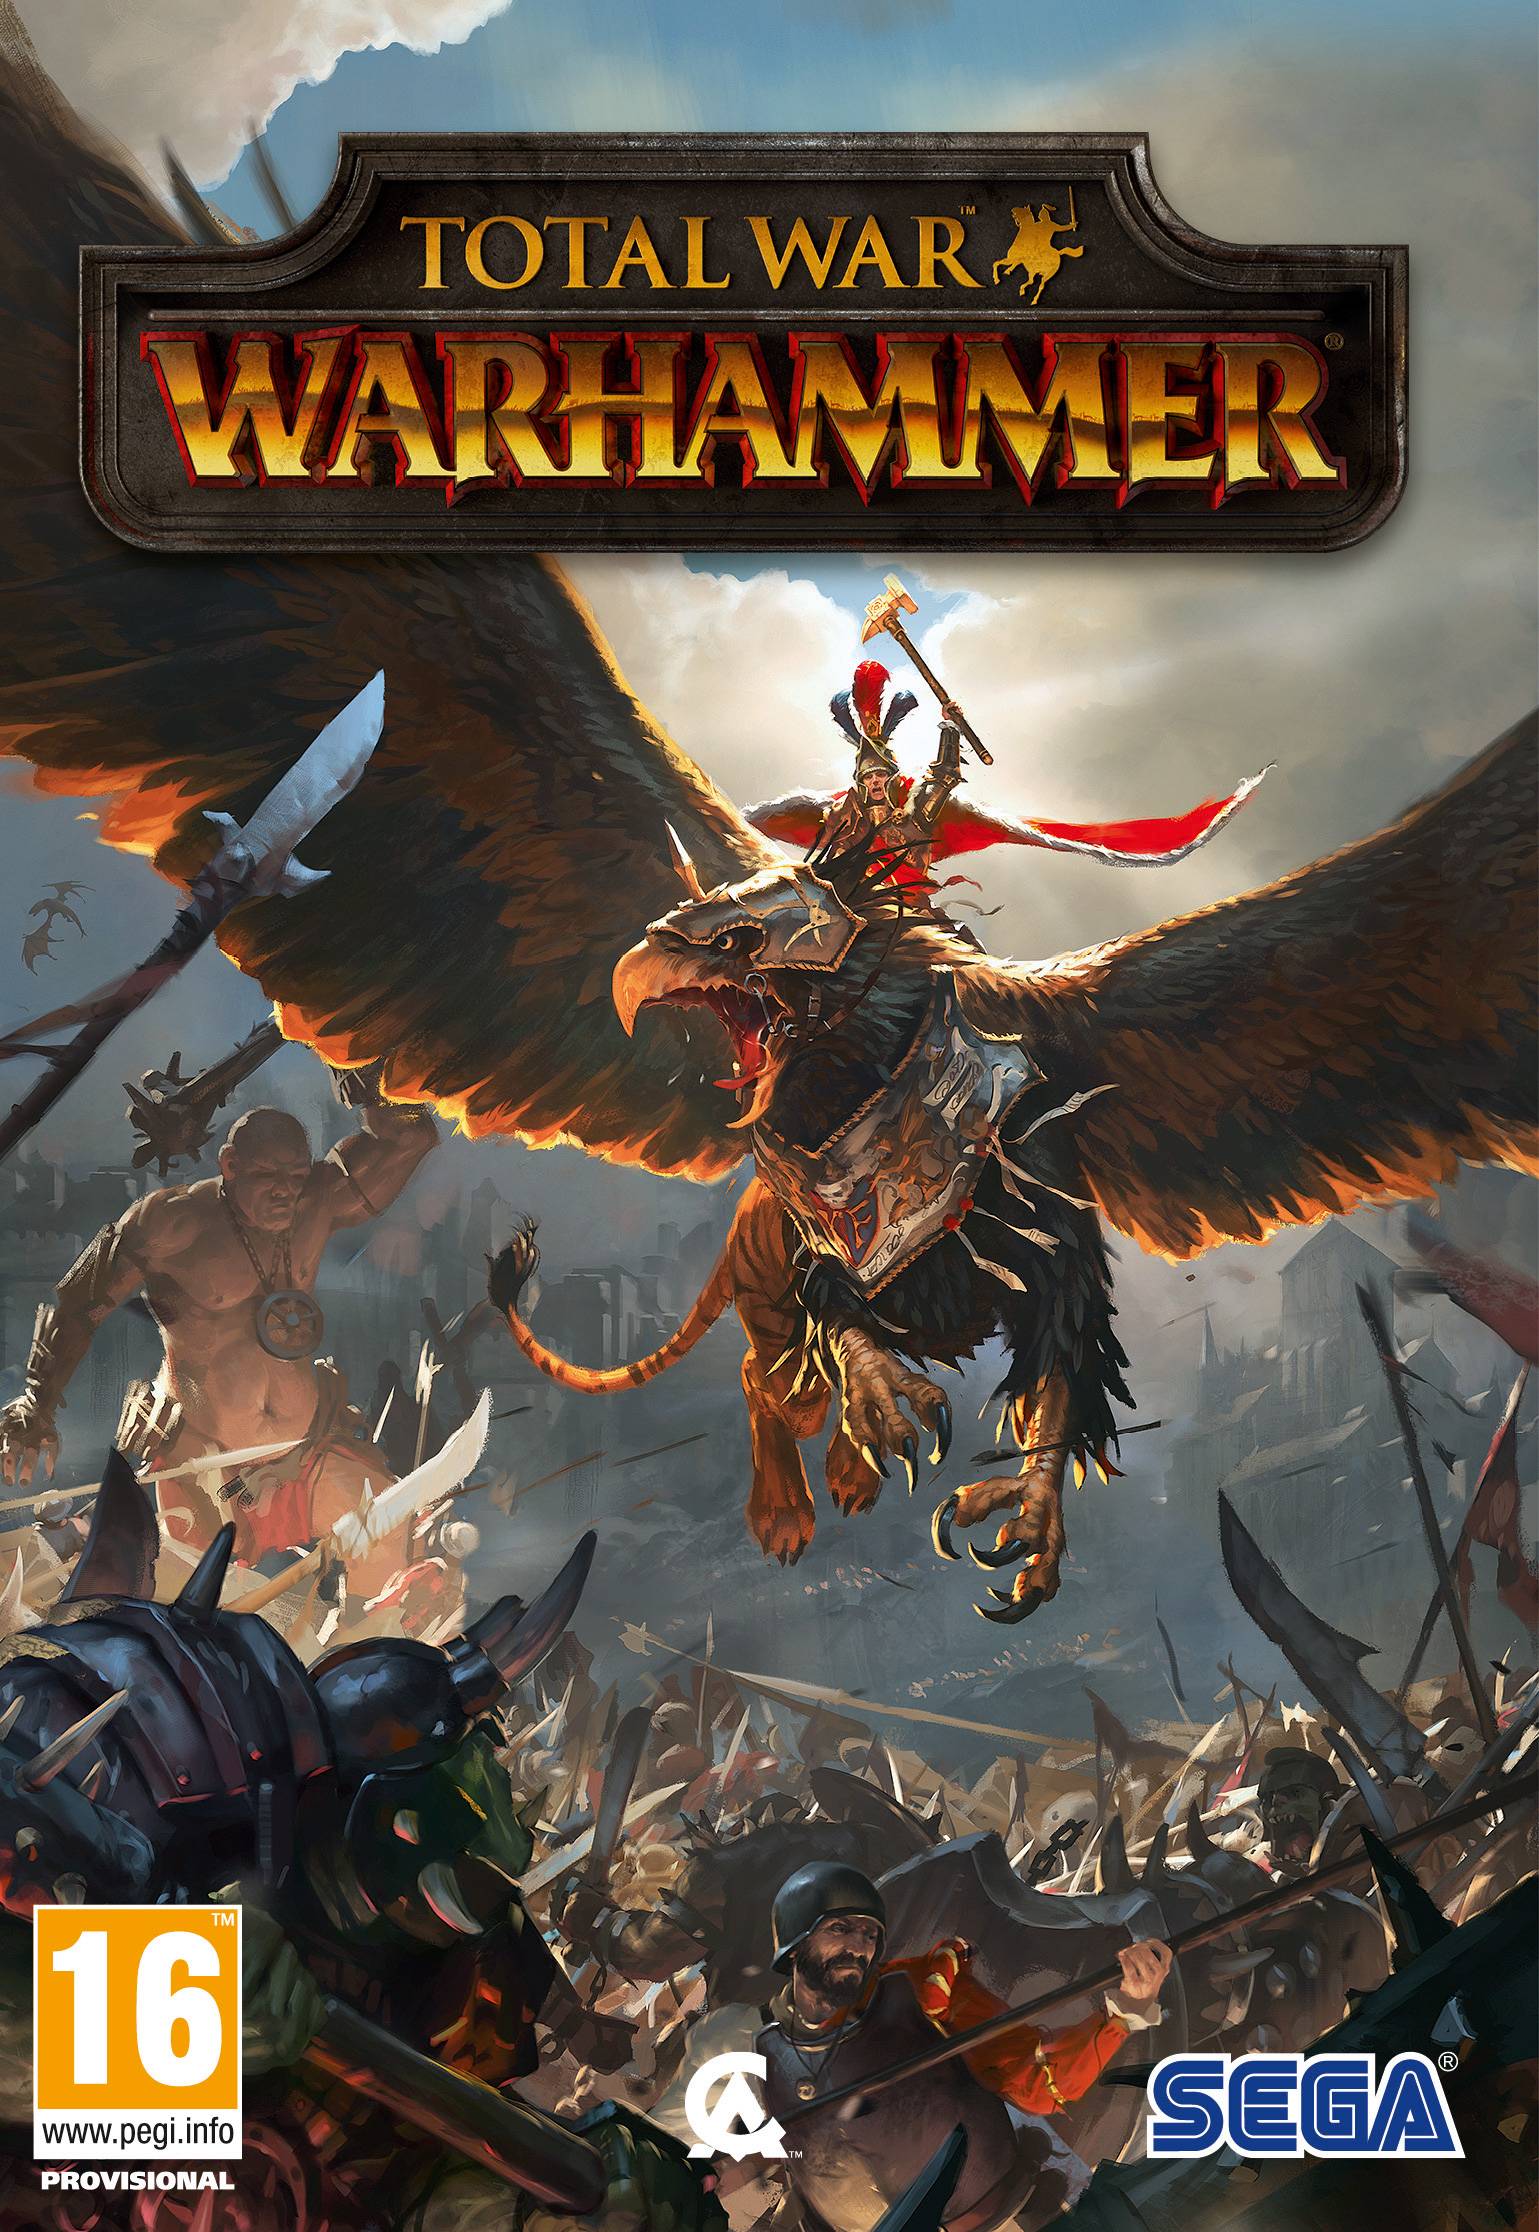 total war warhammer multiplayer campaign